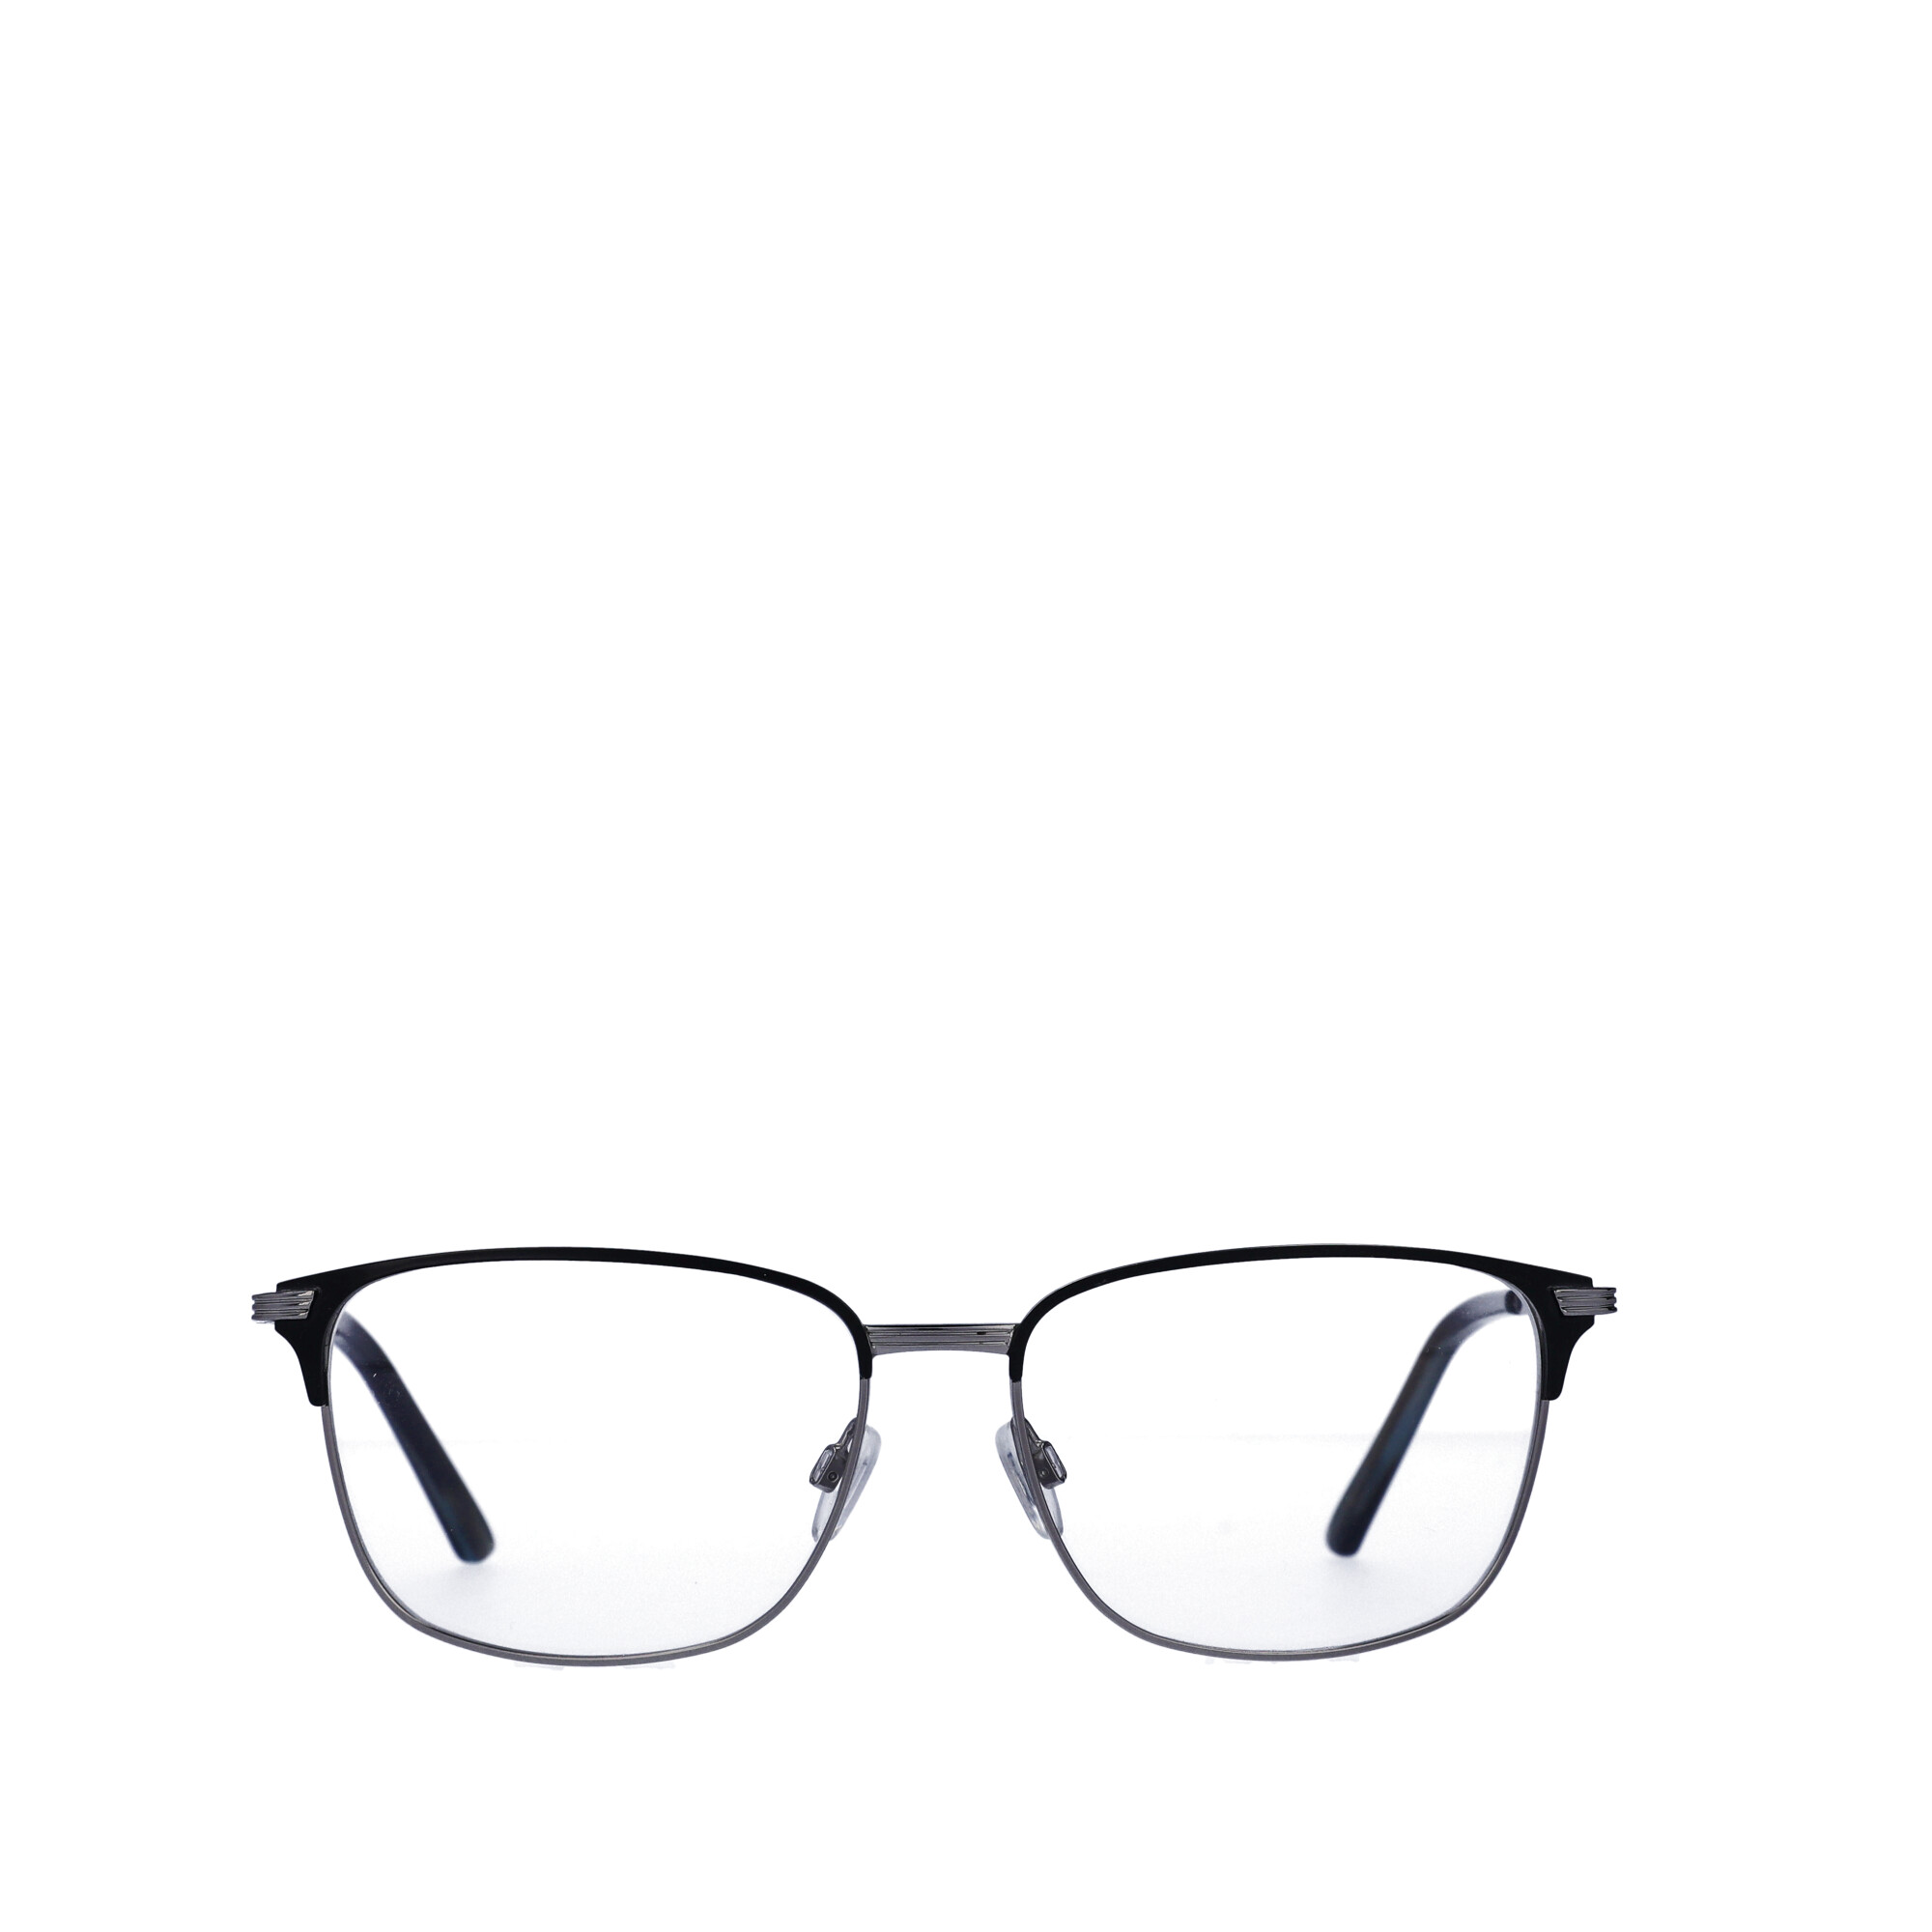 Walmart Men's Rx'able Eyeglasses, Mop44, Black Silver, 57-16-150 - image 5 of 13